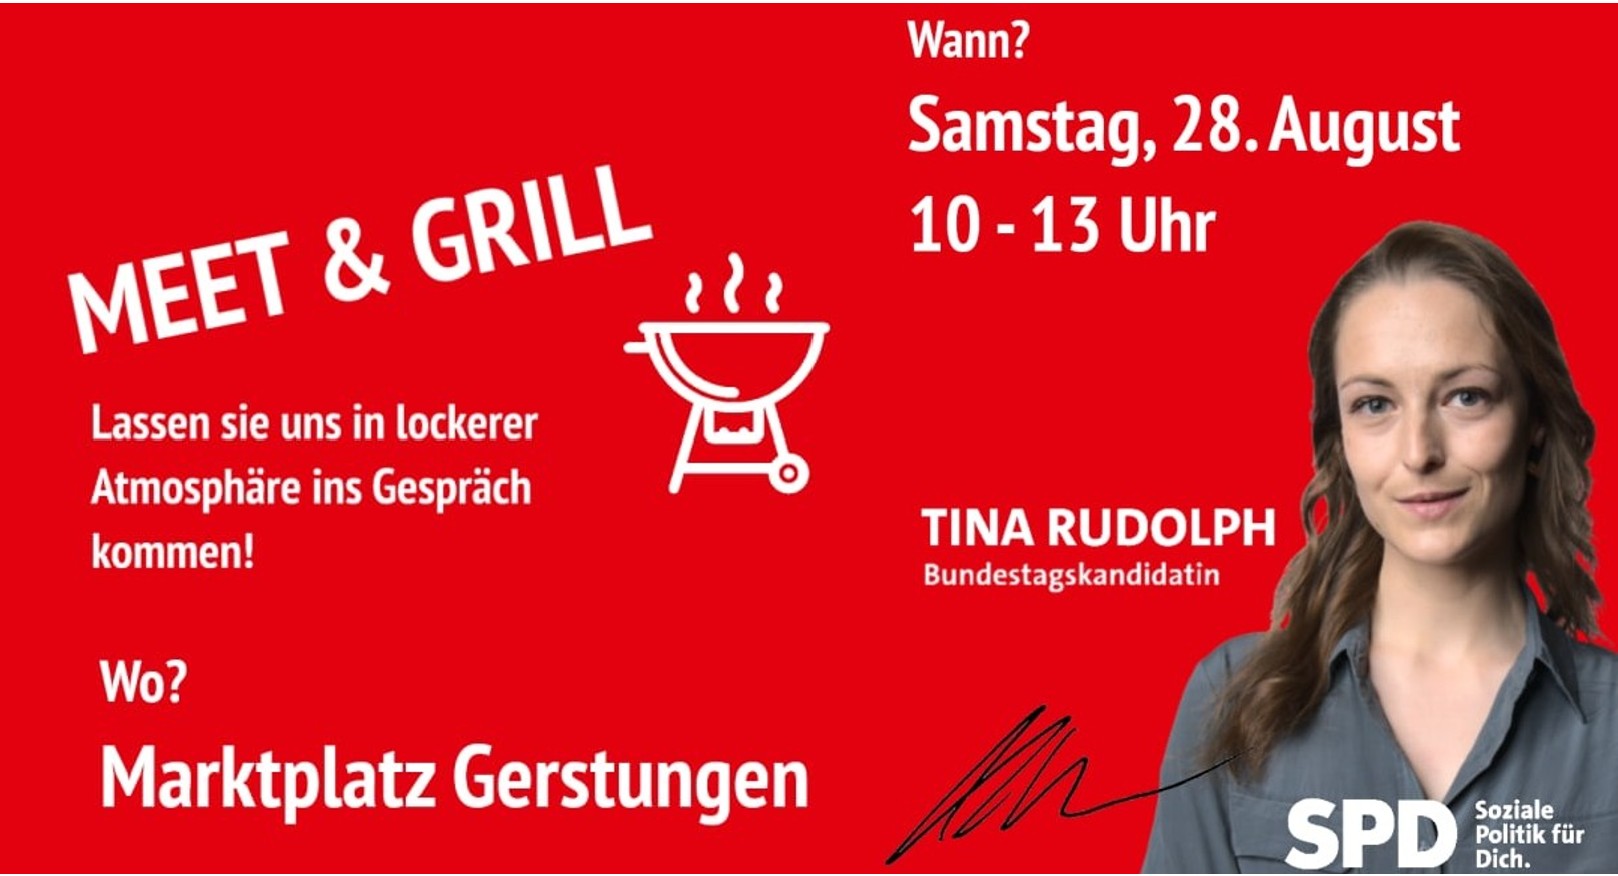 Meet & Grill: 28.08. Marktplatz Gerstungen